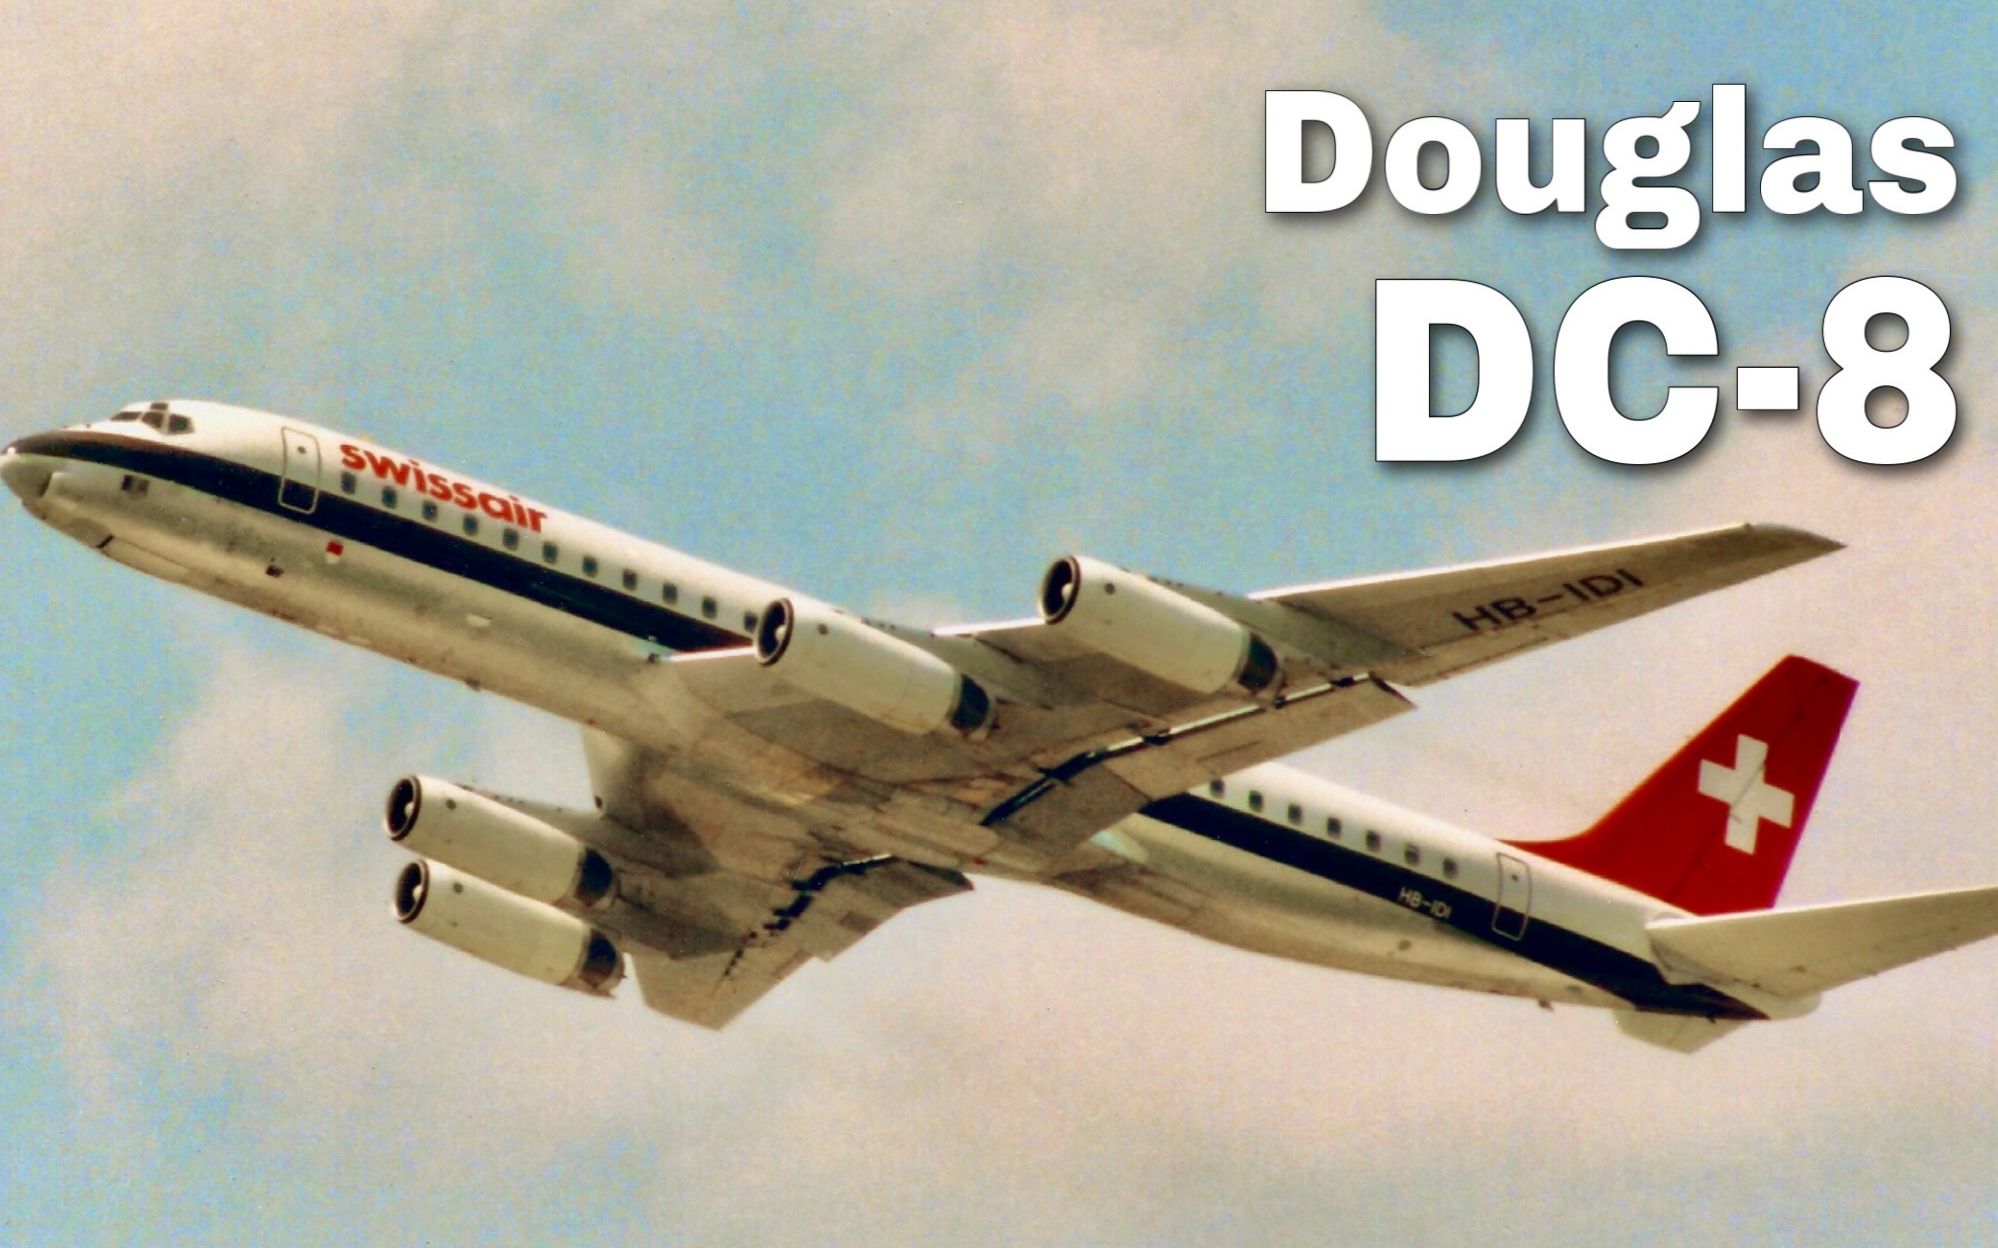 skyships双语美式营销典范道格拉斯dc8世界上第一架突破音障的客机